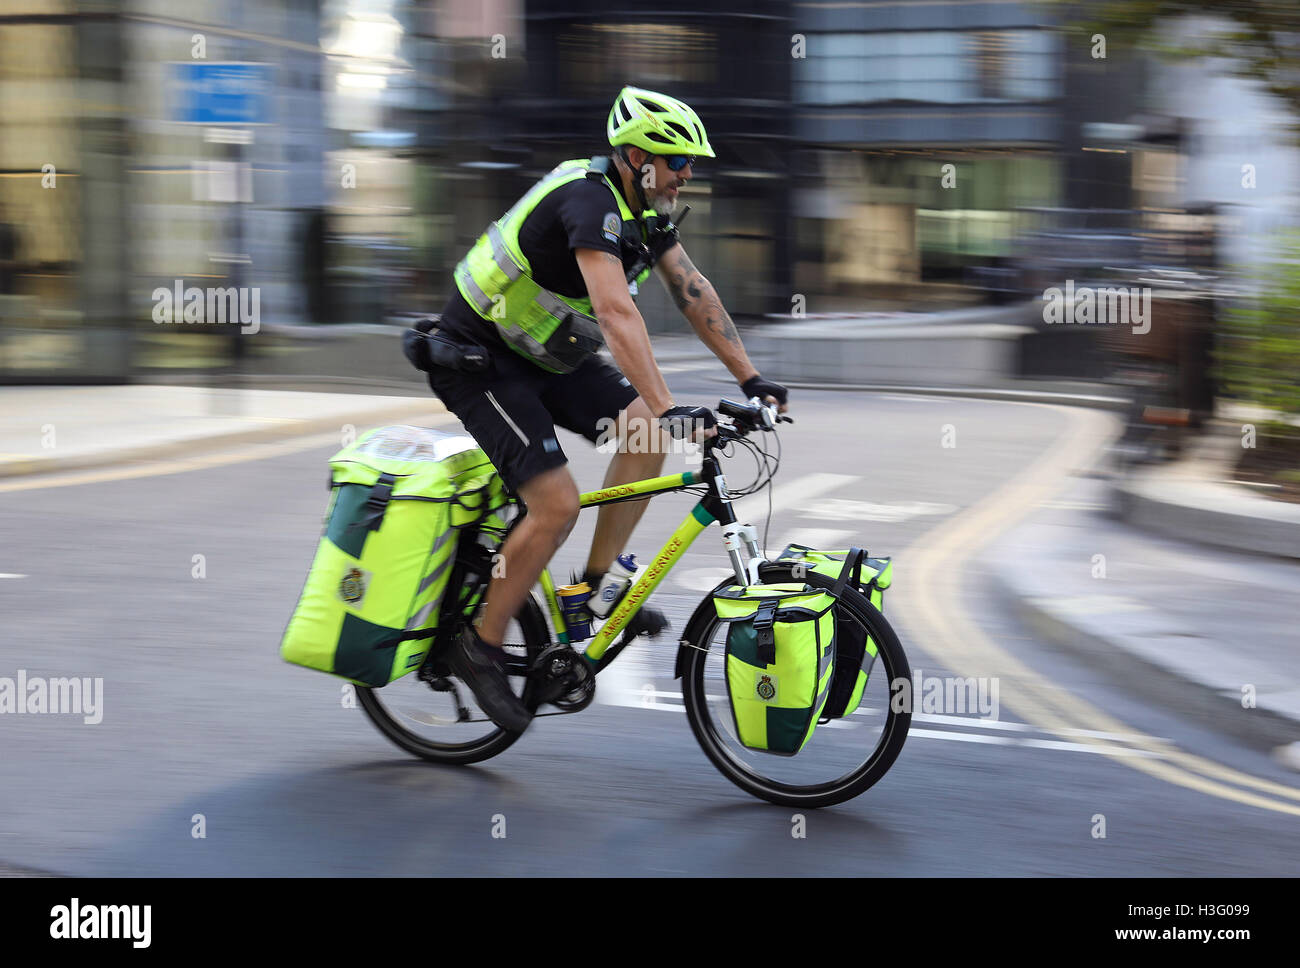 cycle medic bicycle ambulance rapid response Stock Photo